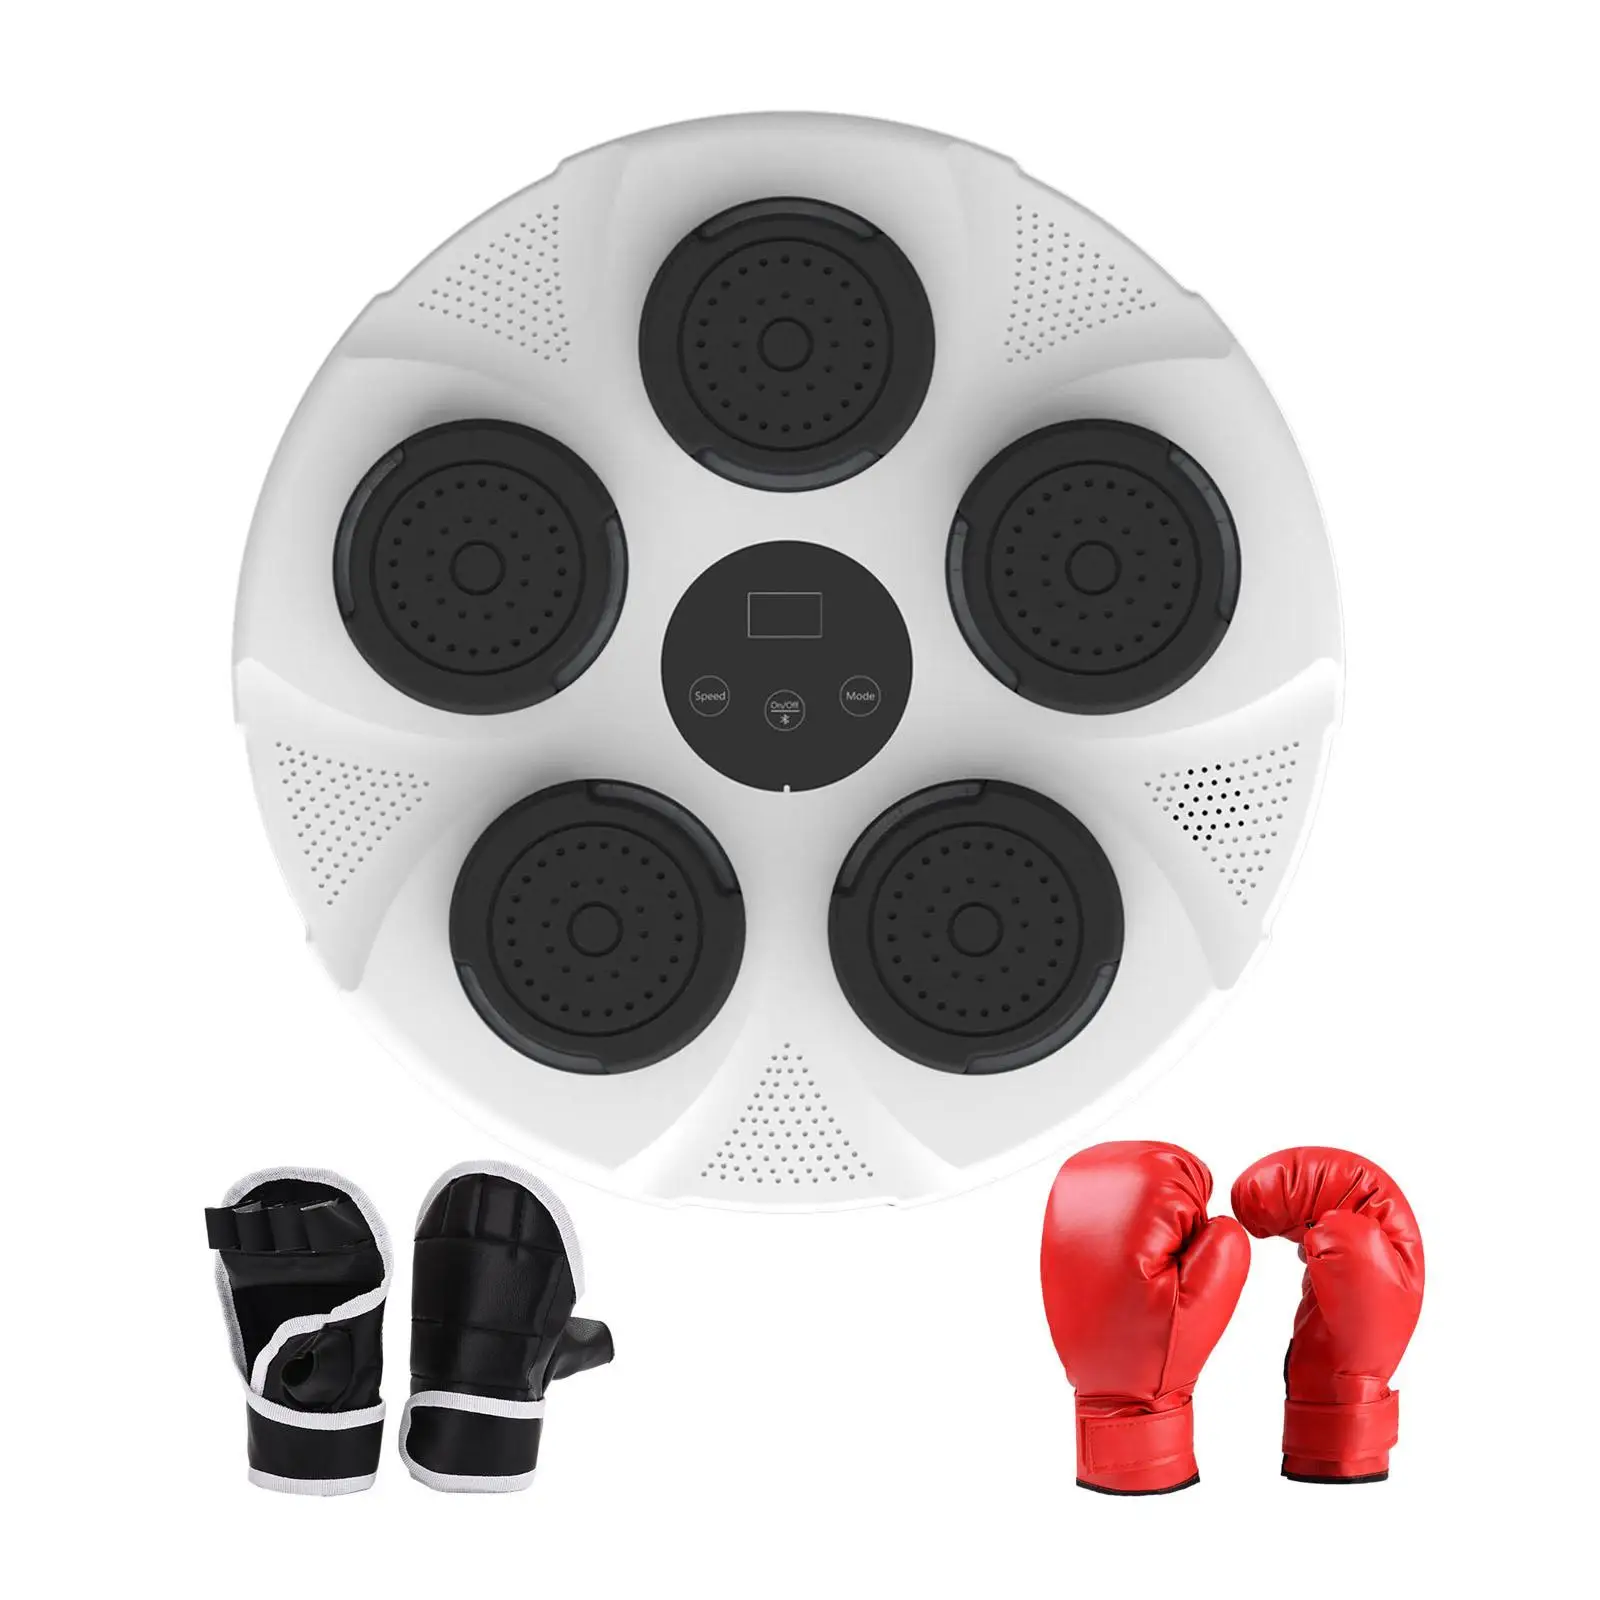 Music Boxing Machine Boxing Training Equipment for Response Training Focus